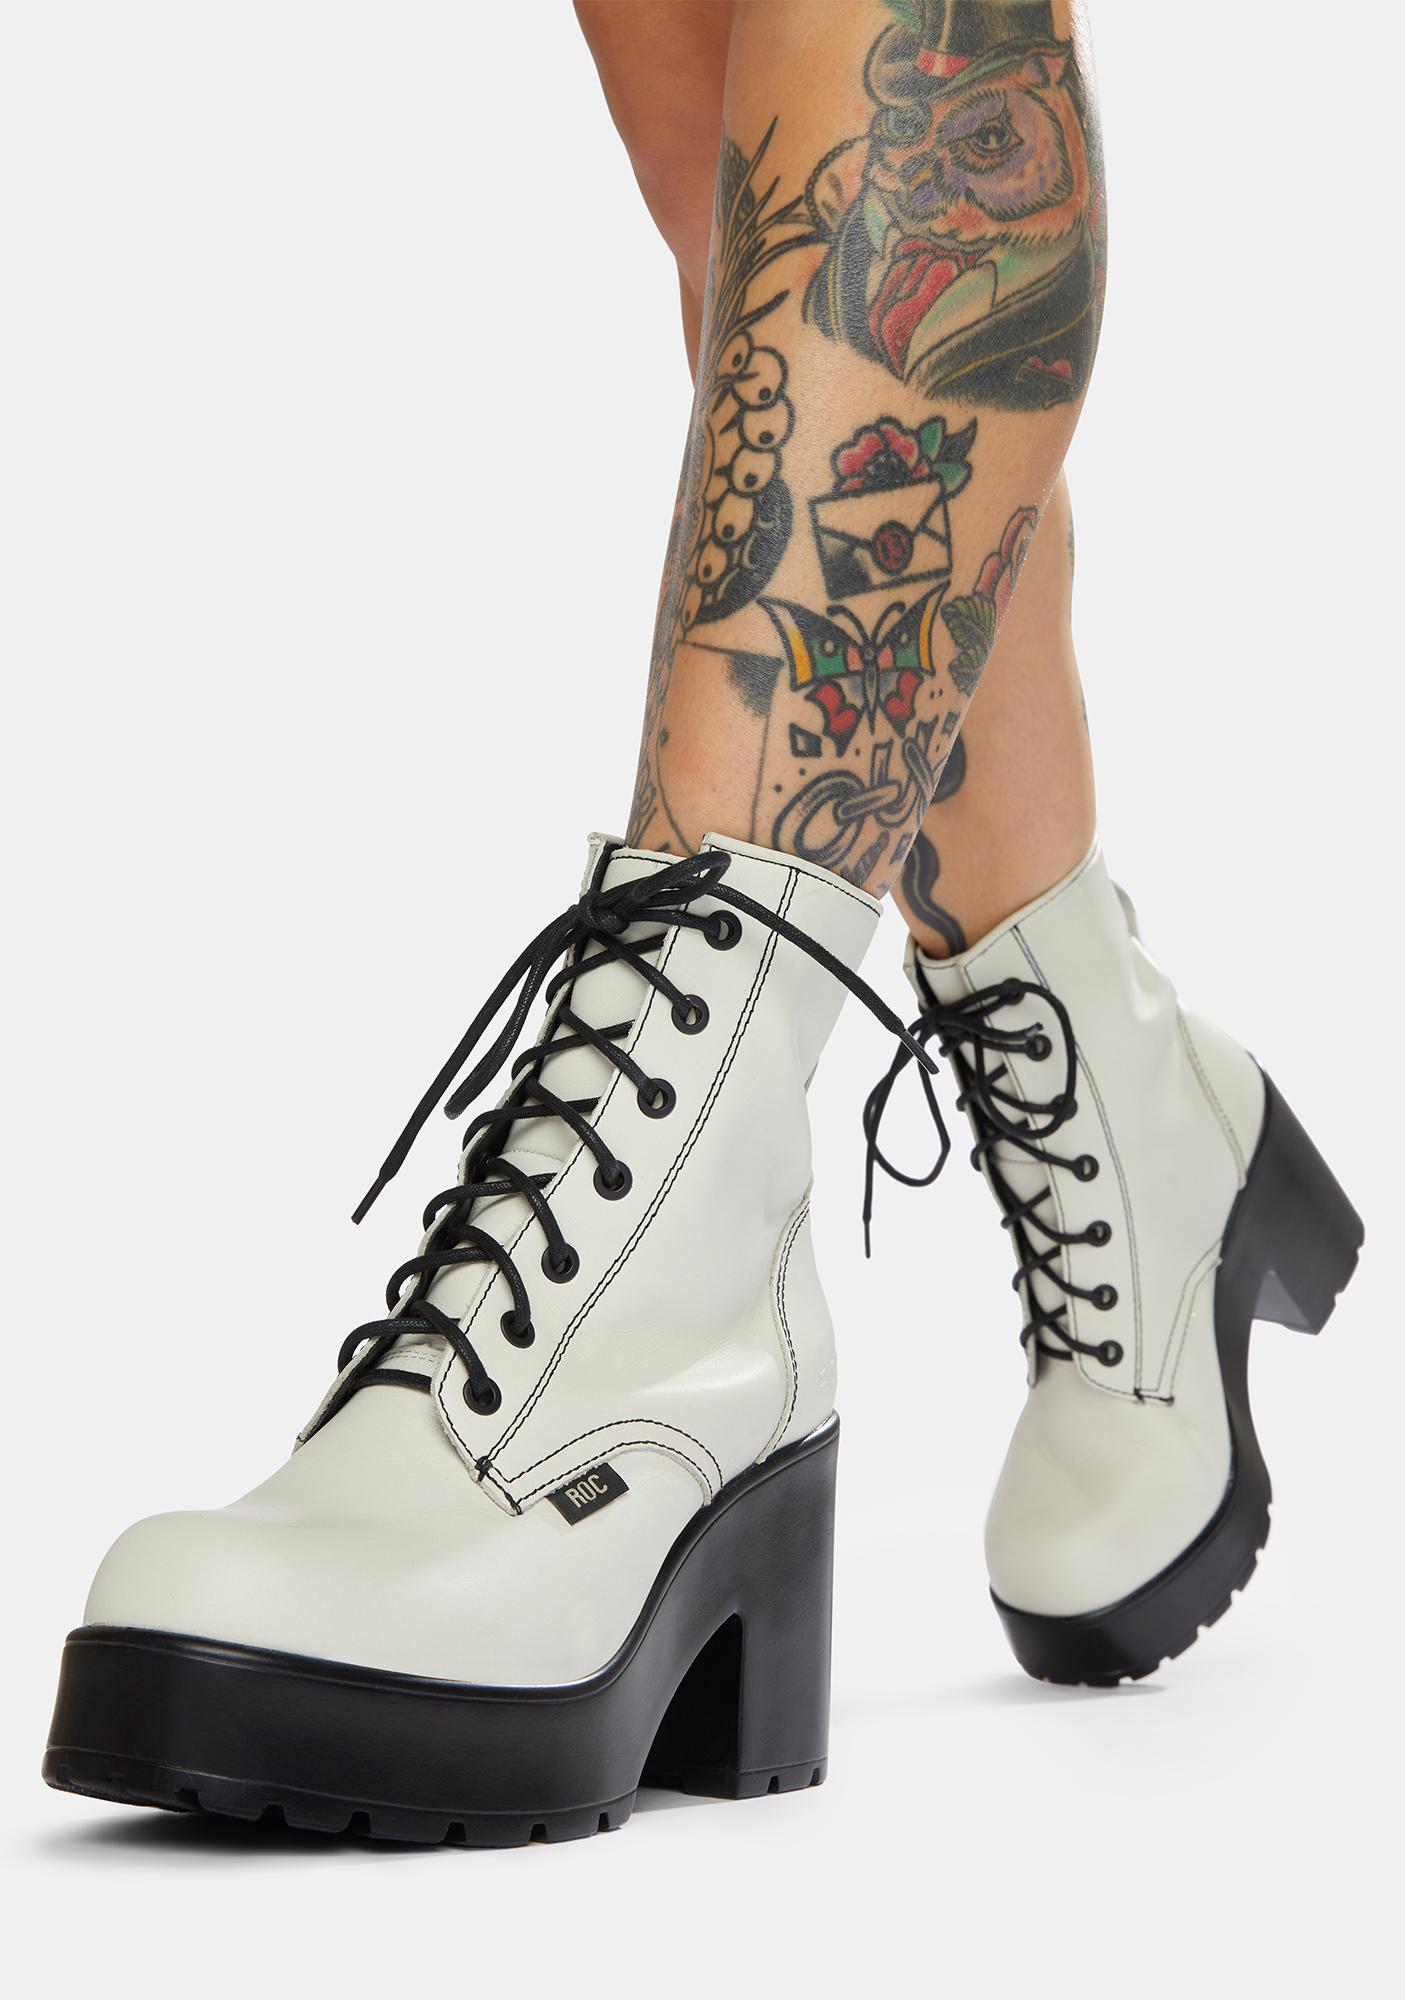 white roc boots